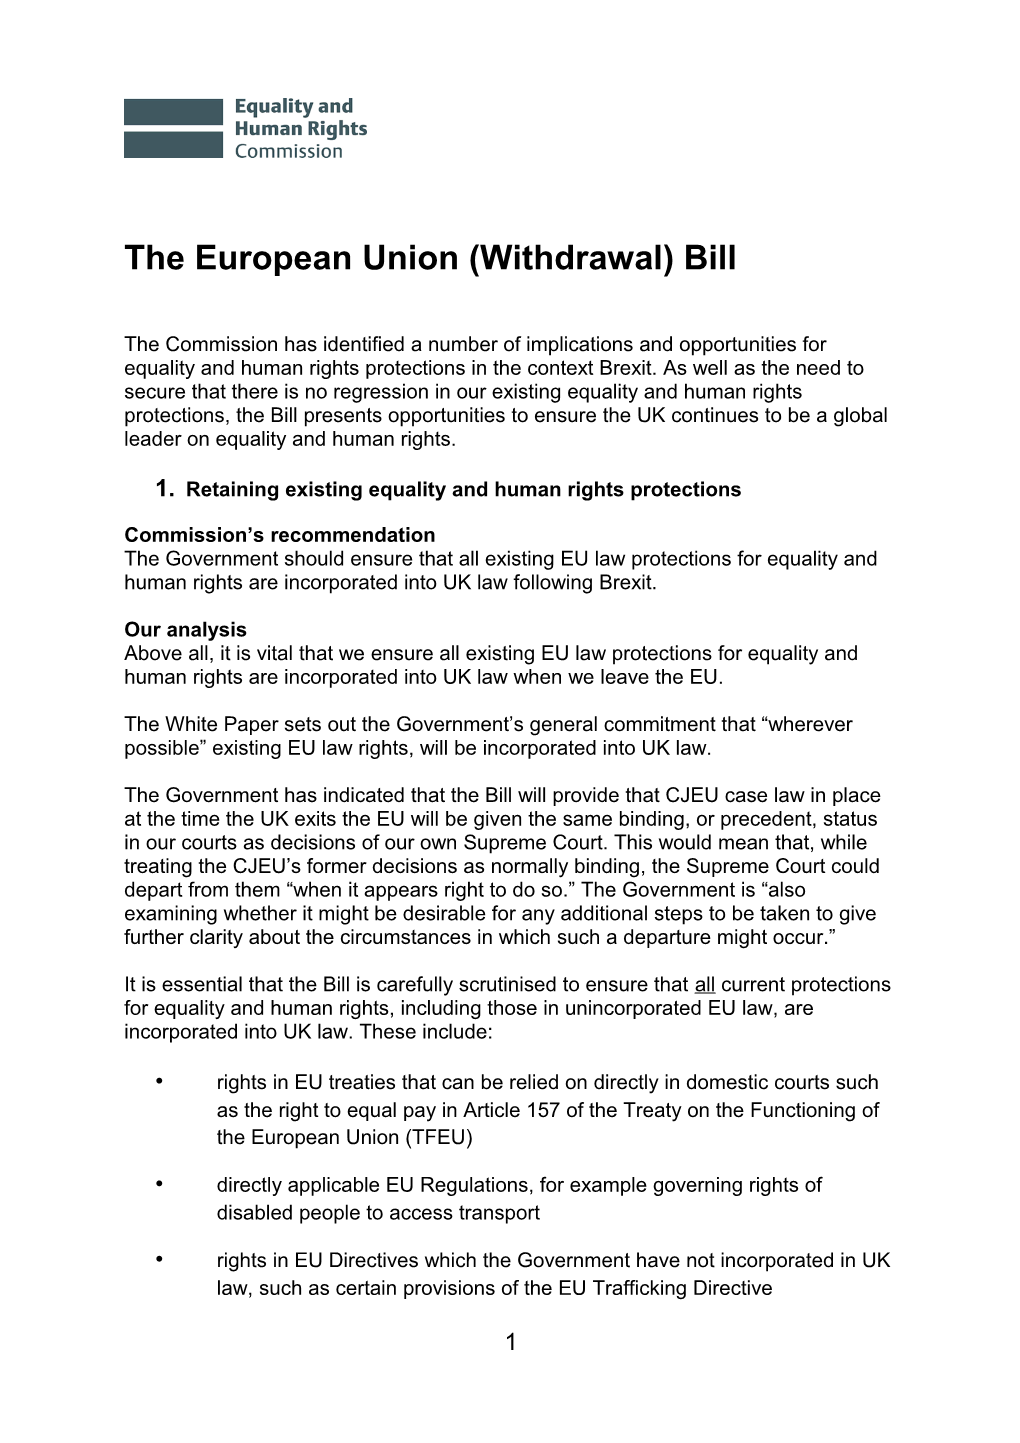 The European Union (Withdrawal) Bill